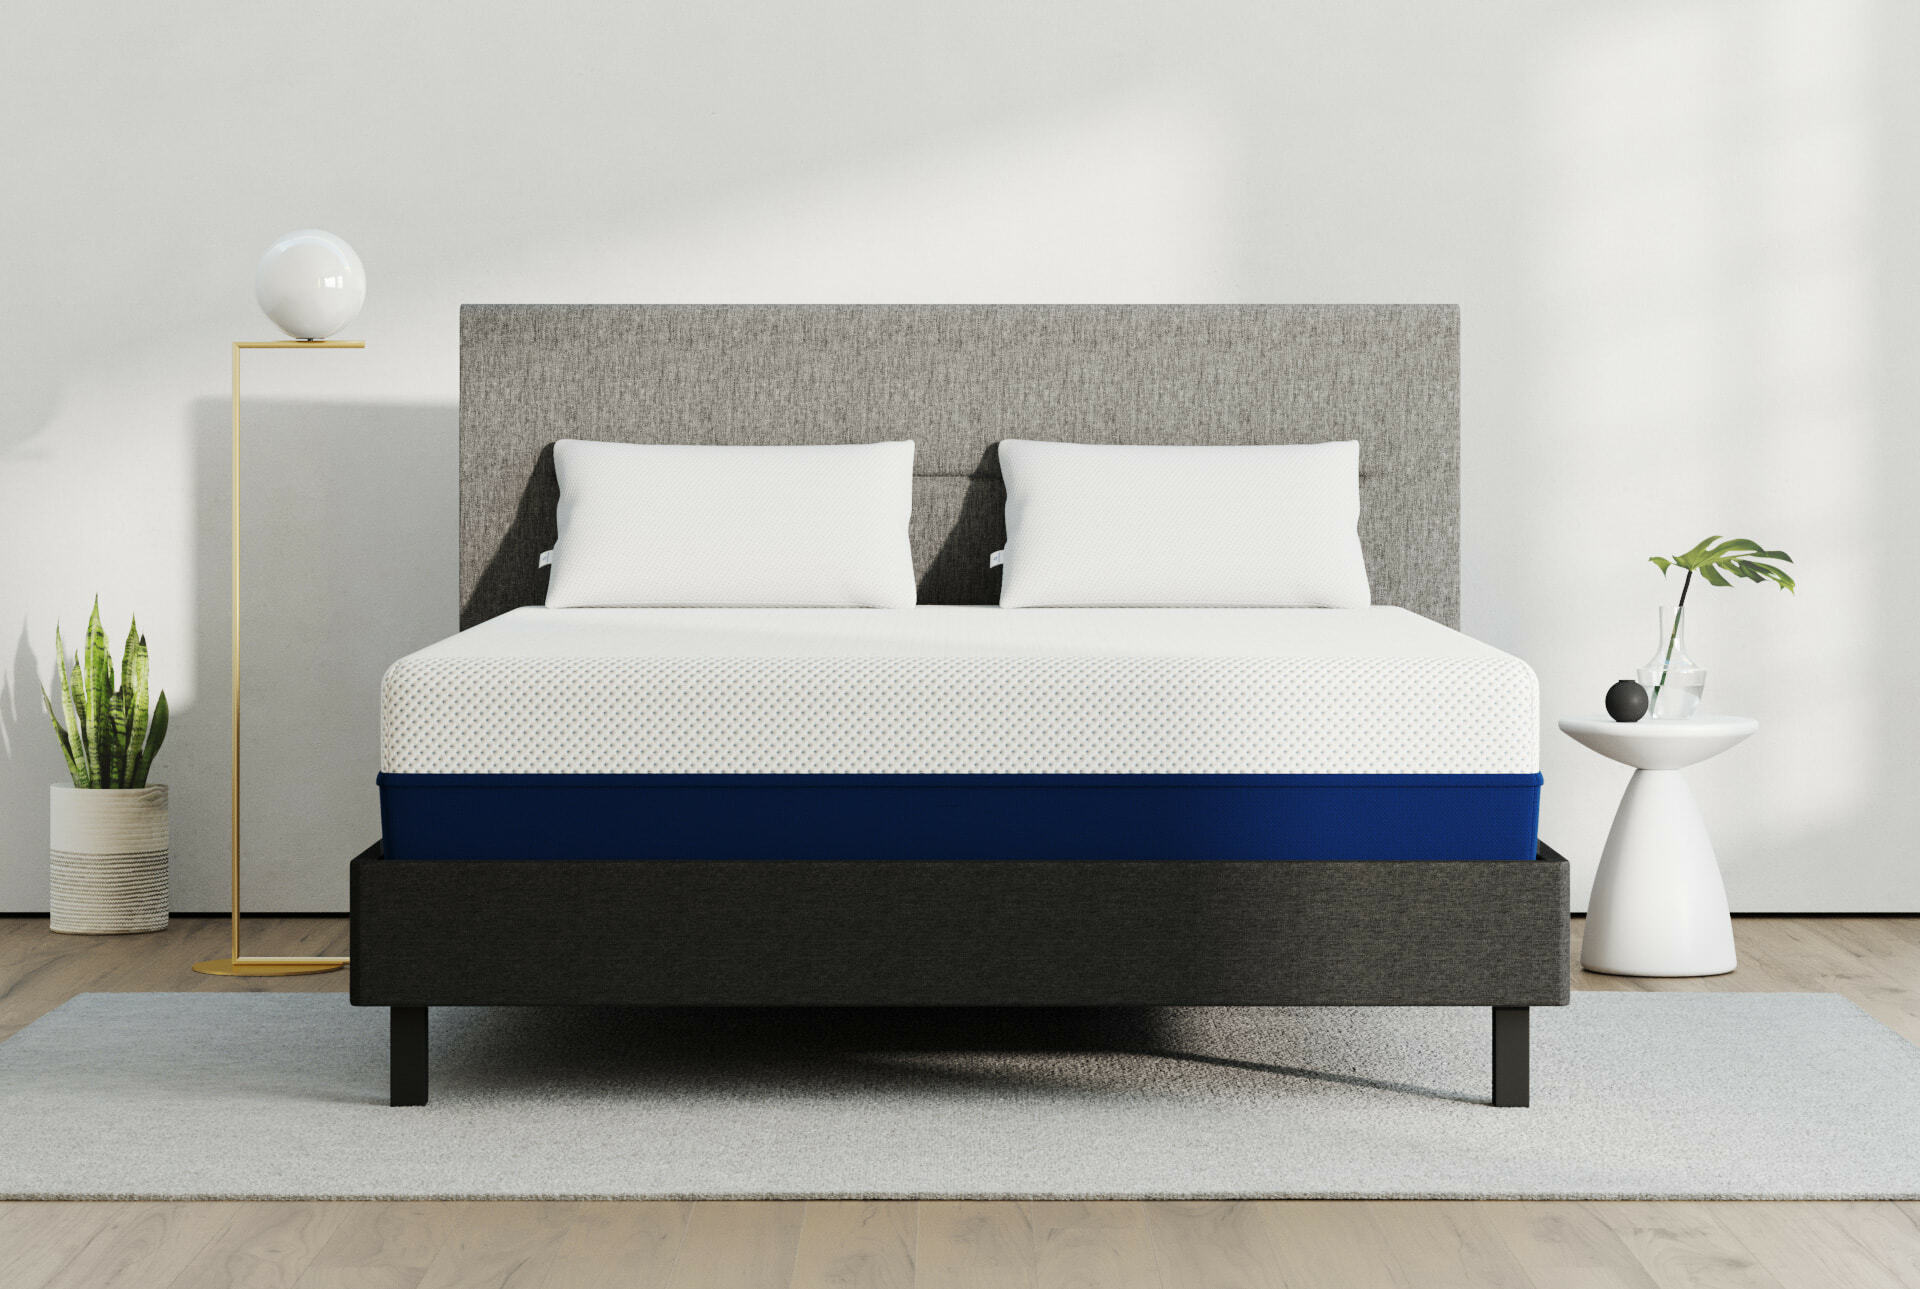 amerisleep mattress review reddit